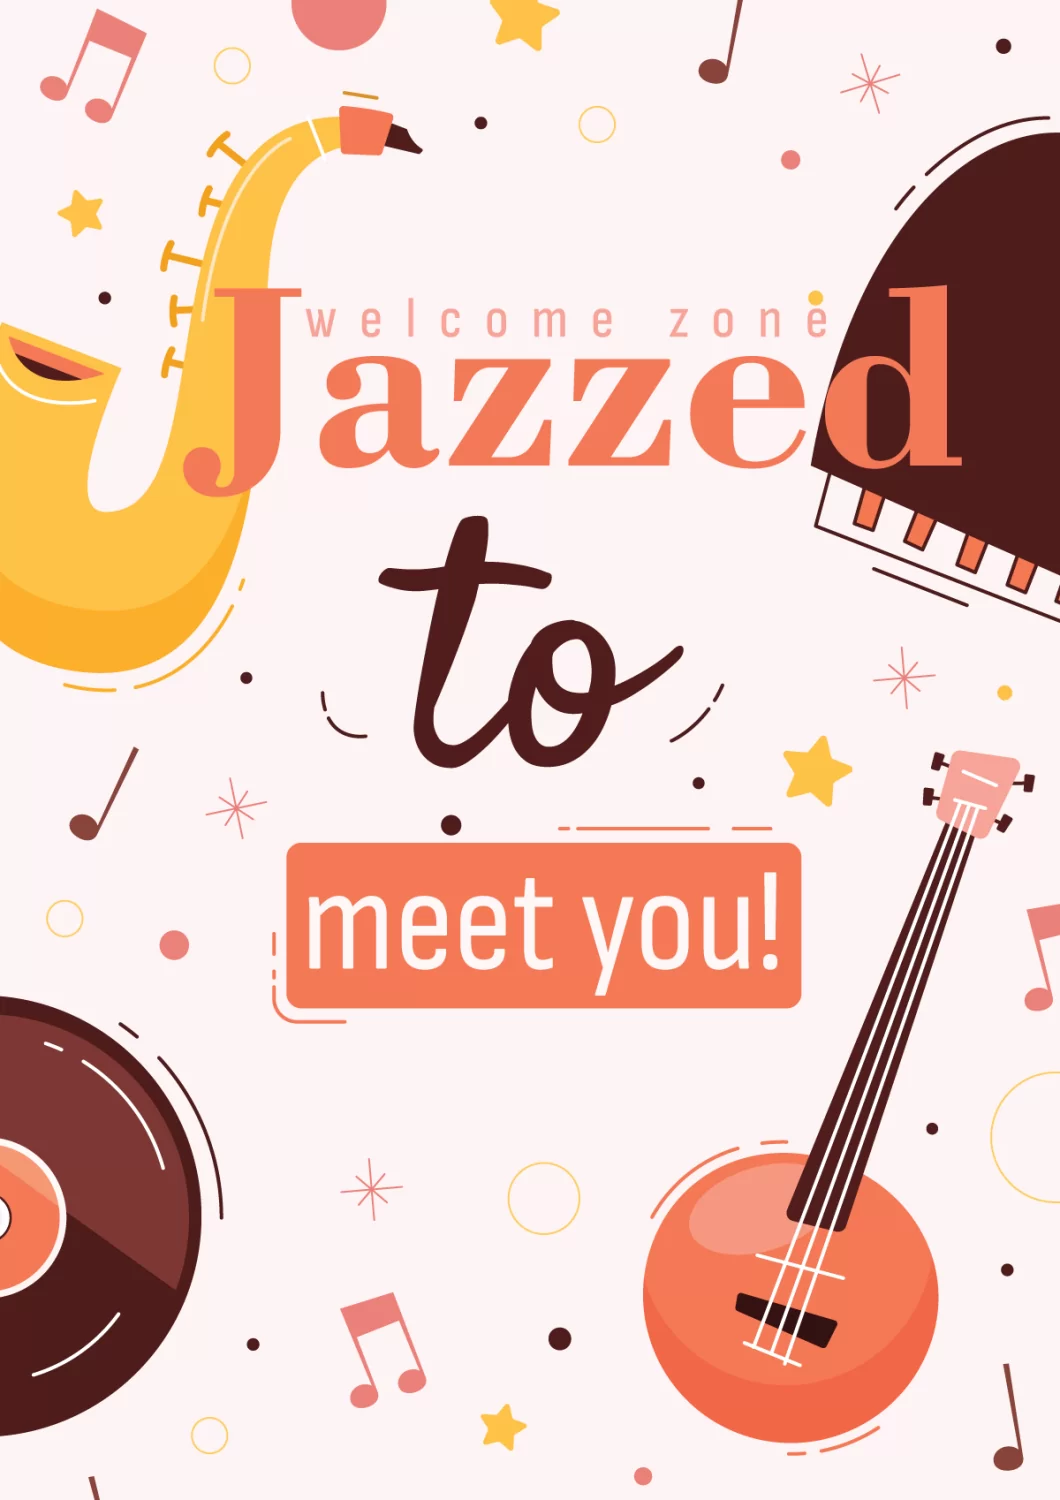 Jazzed to meet you! Музыка на свадьбе: классика джаза для велком зоны